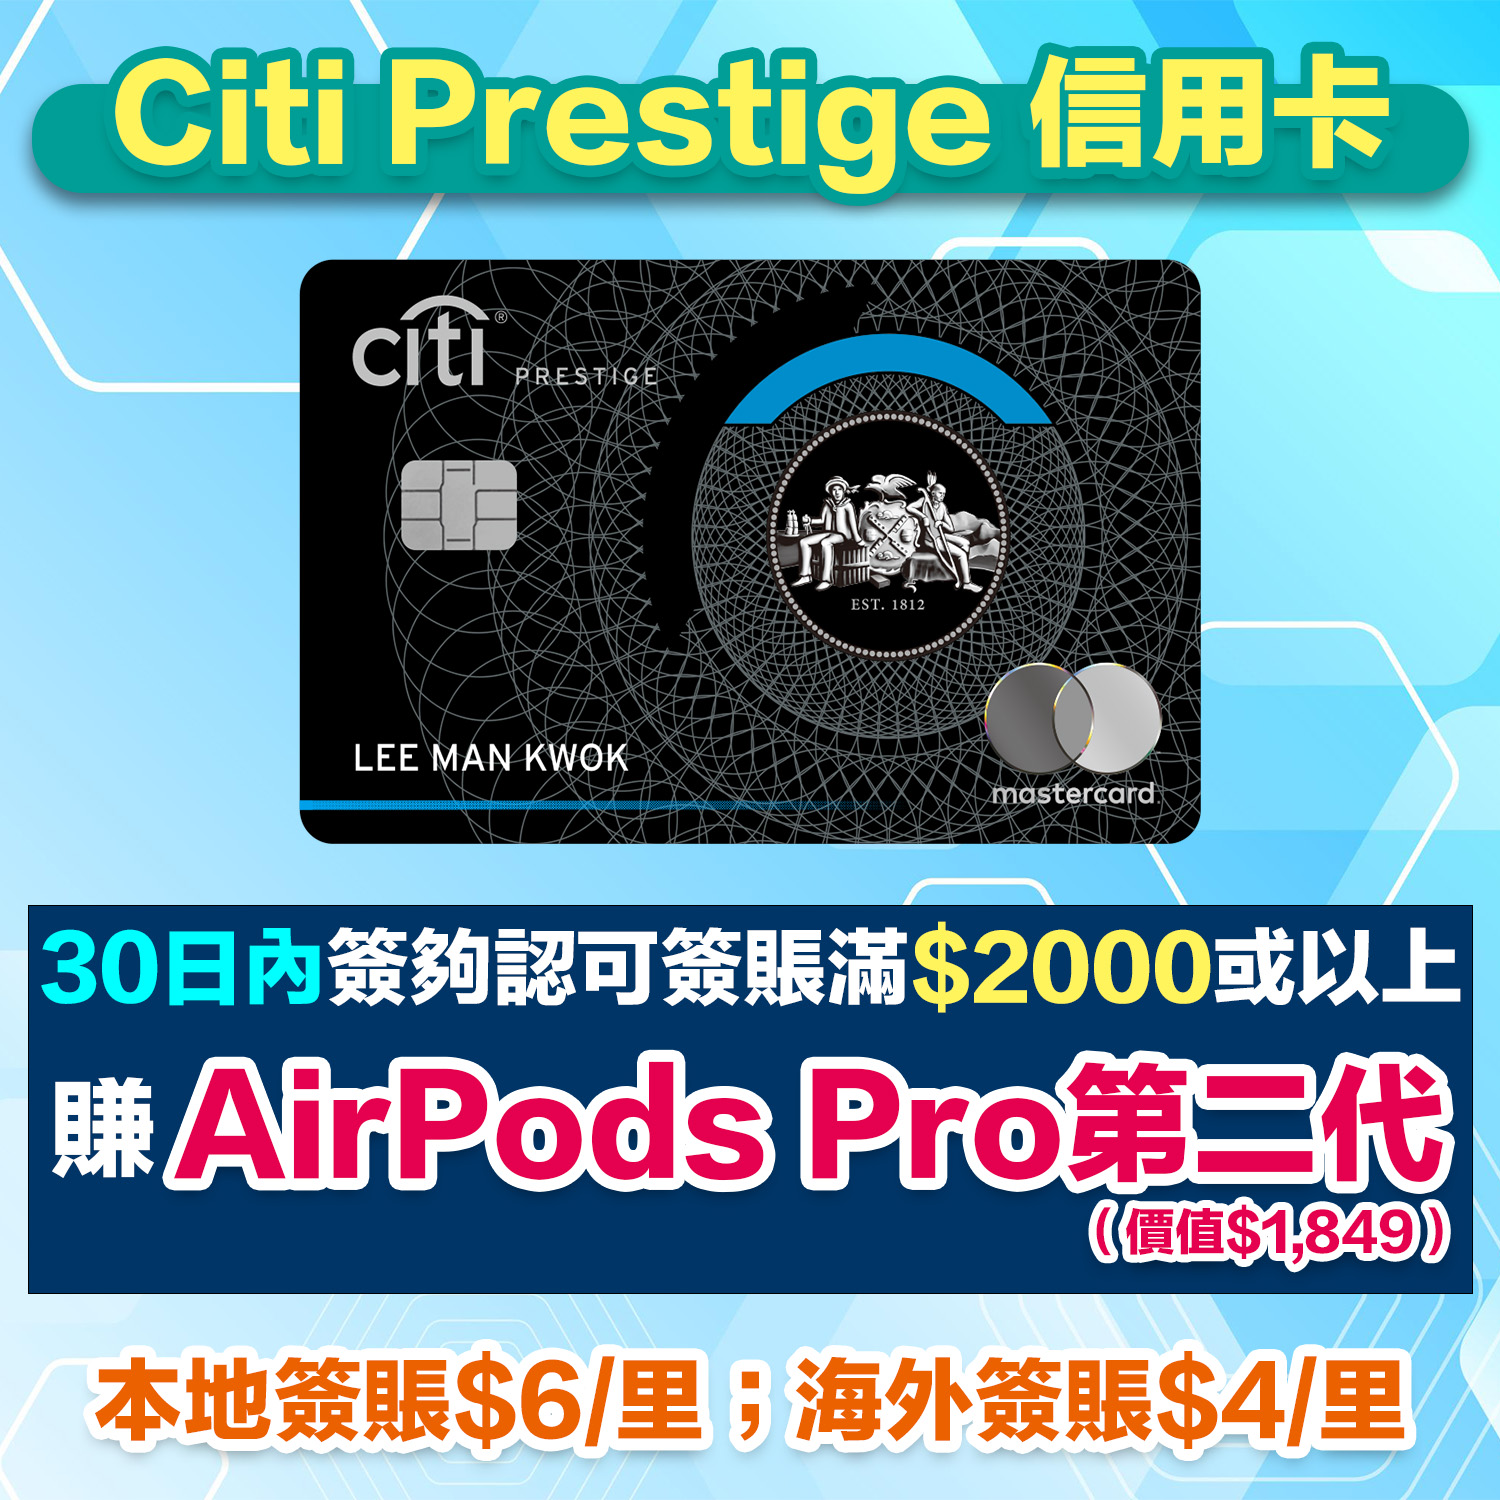 Citi Prestige 信用卡｜本地5星酒店住1晚送1晚 米芝蓮官方合作夥伴 平日HK$6=1里可換多個里數計劃！電子錢包食迎新無成本賺AirPods Pro 2！